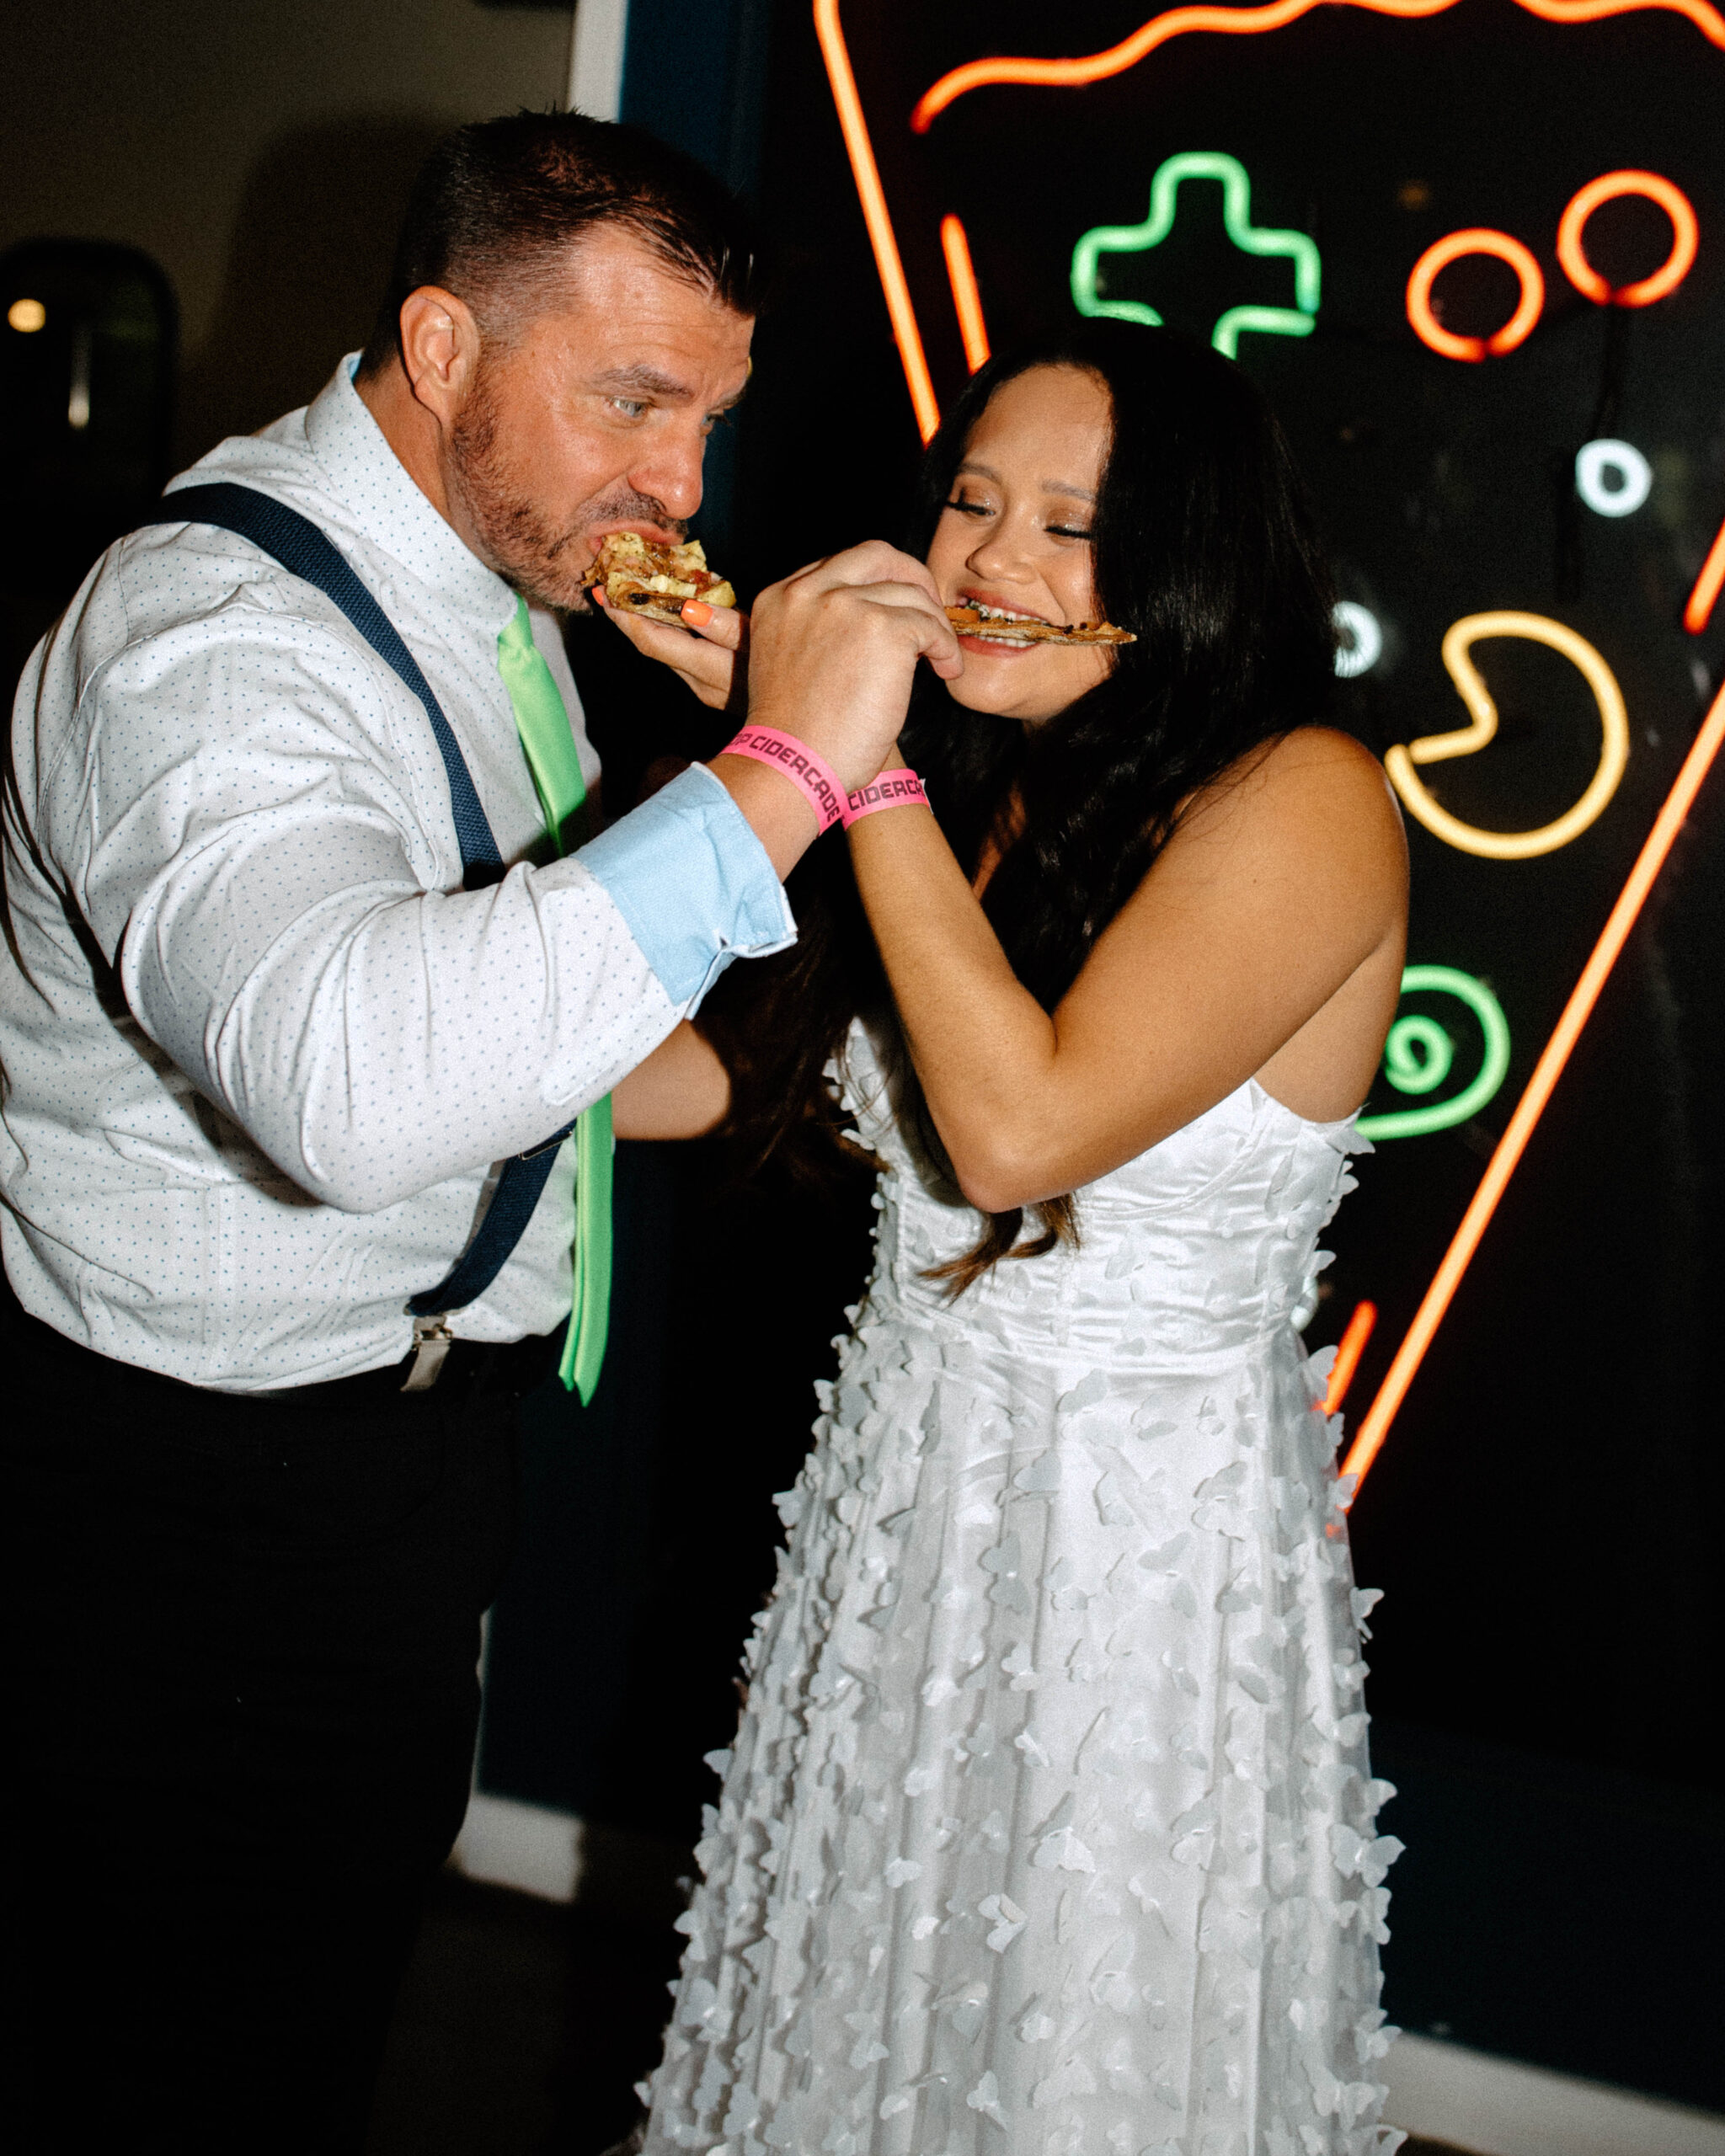 Wedding Photos with Pizza - Wedding Reception flash photographs at arcade bar